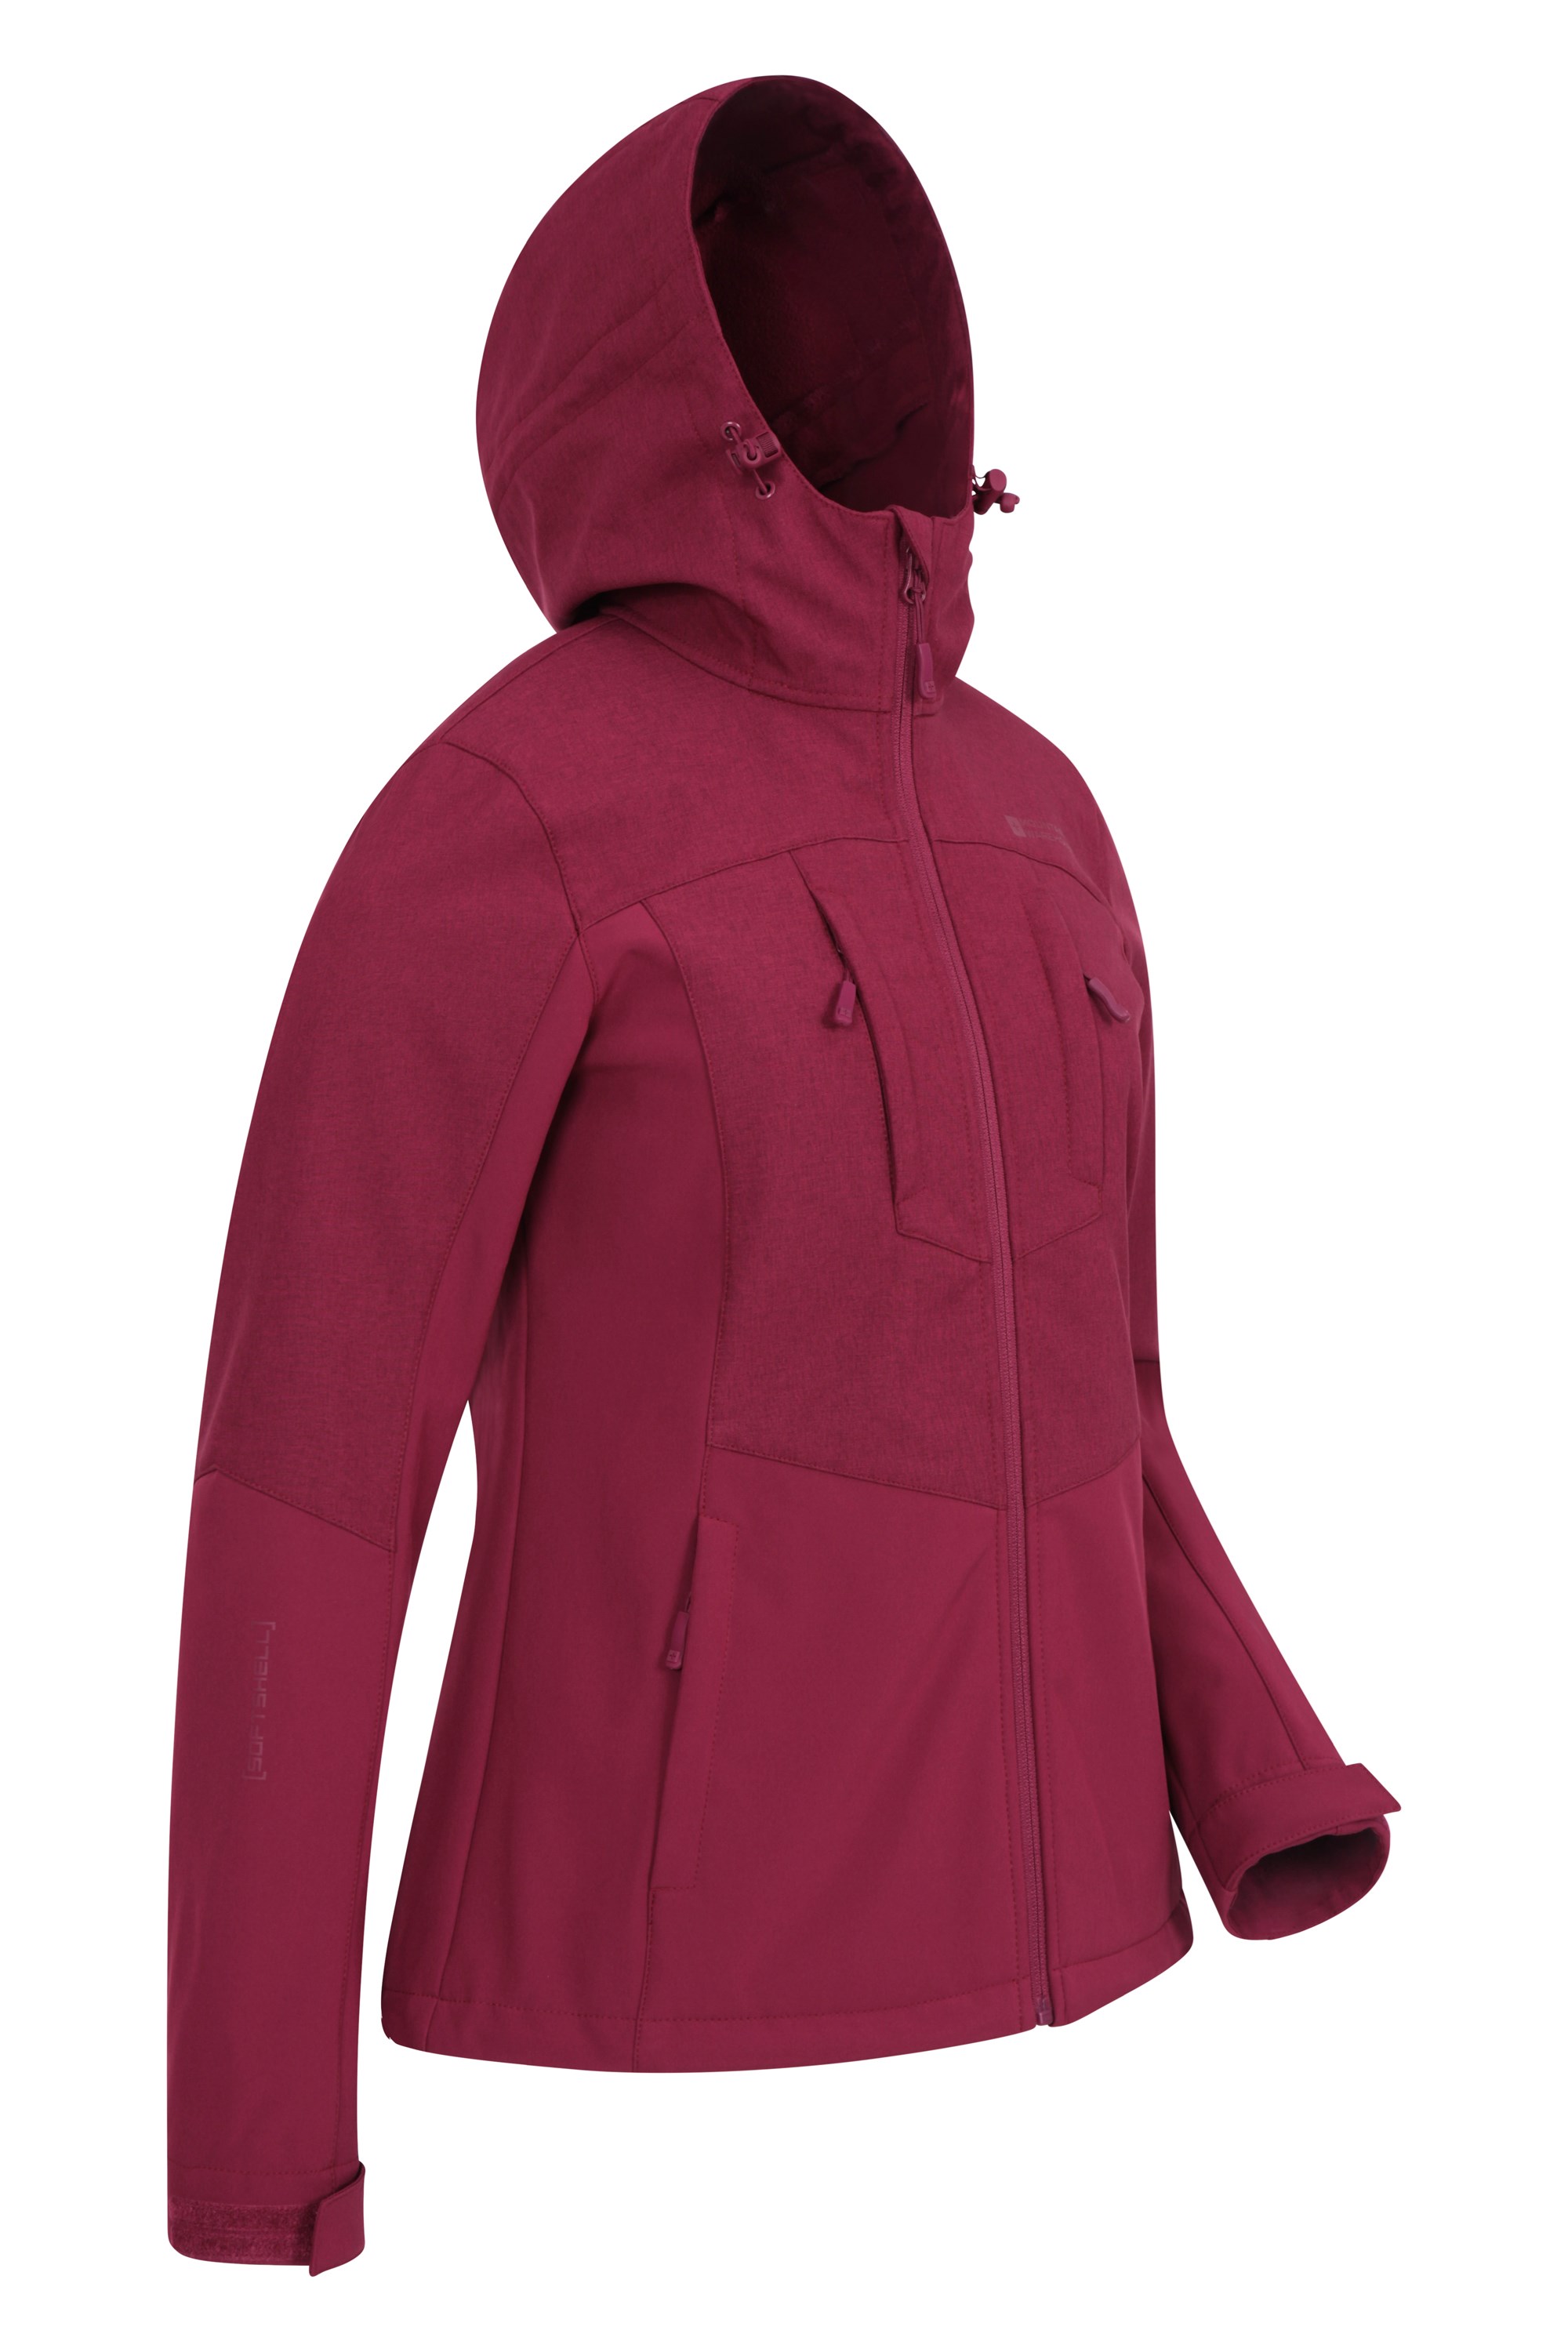 Mountain Warehouse Wms Trail Extreme Womens Waterproof Jacket 